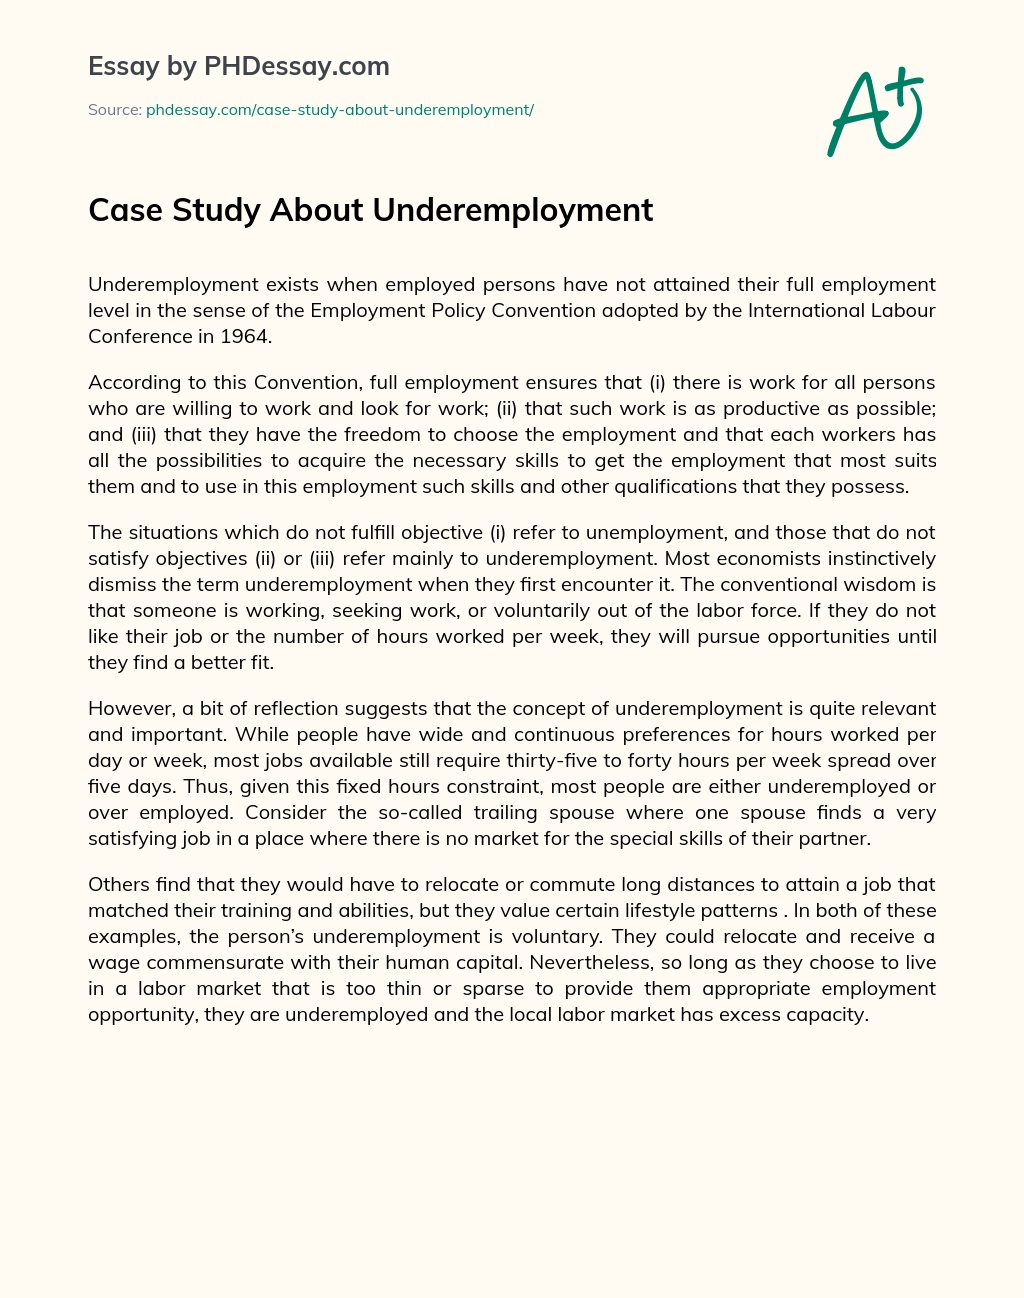 Case Study About Underemployment essay